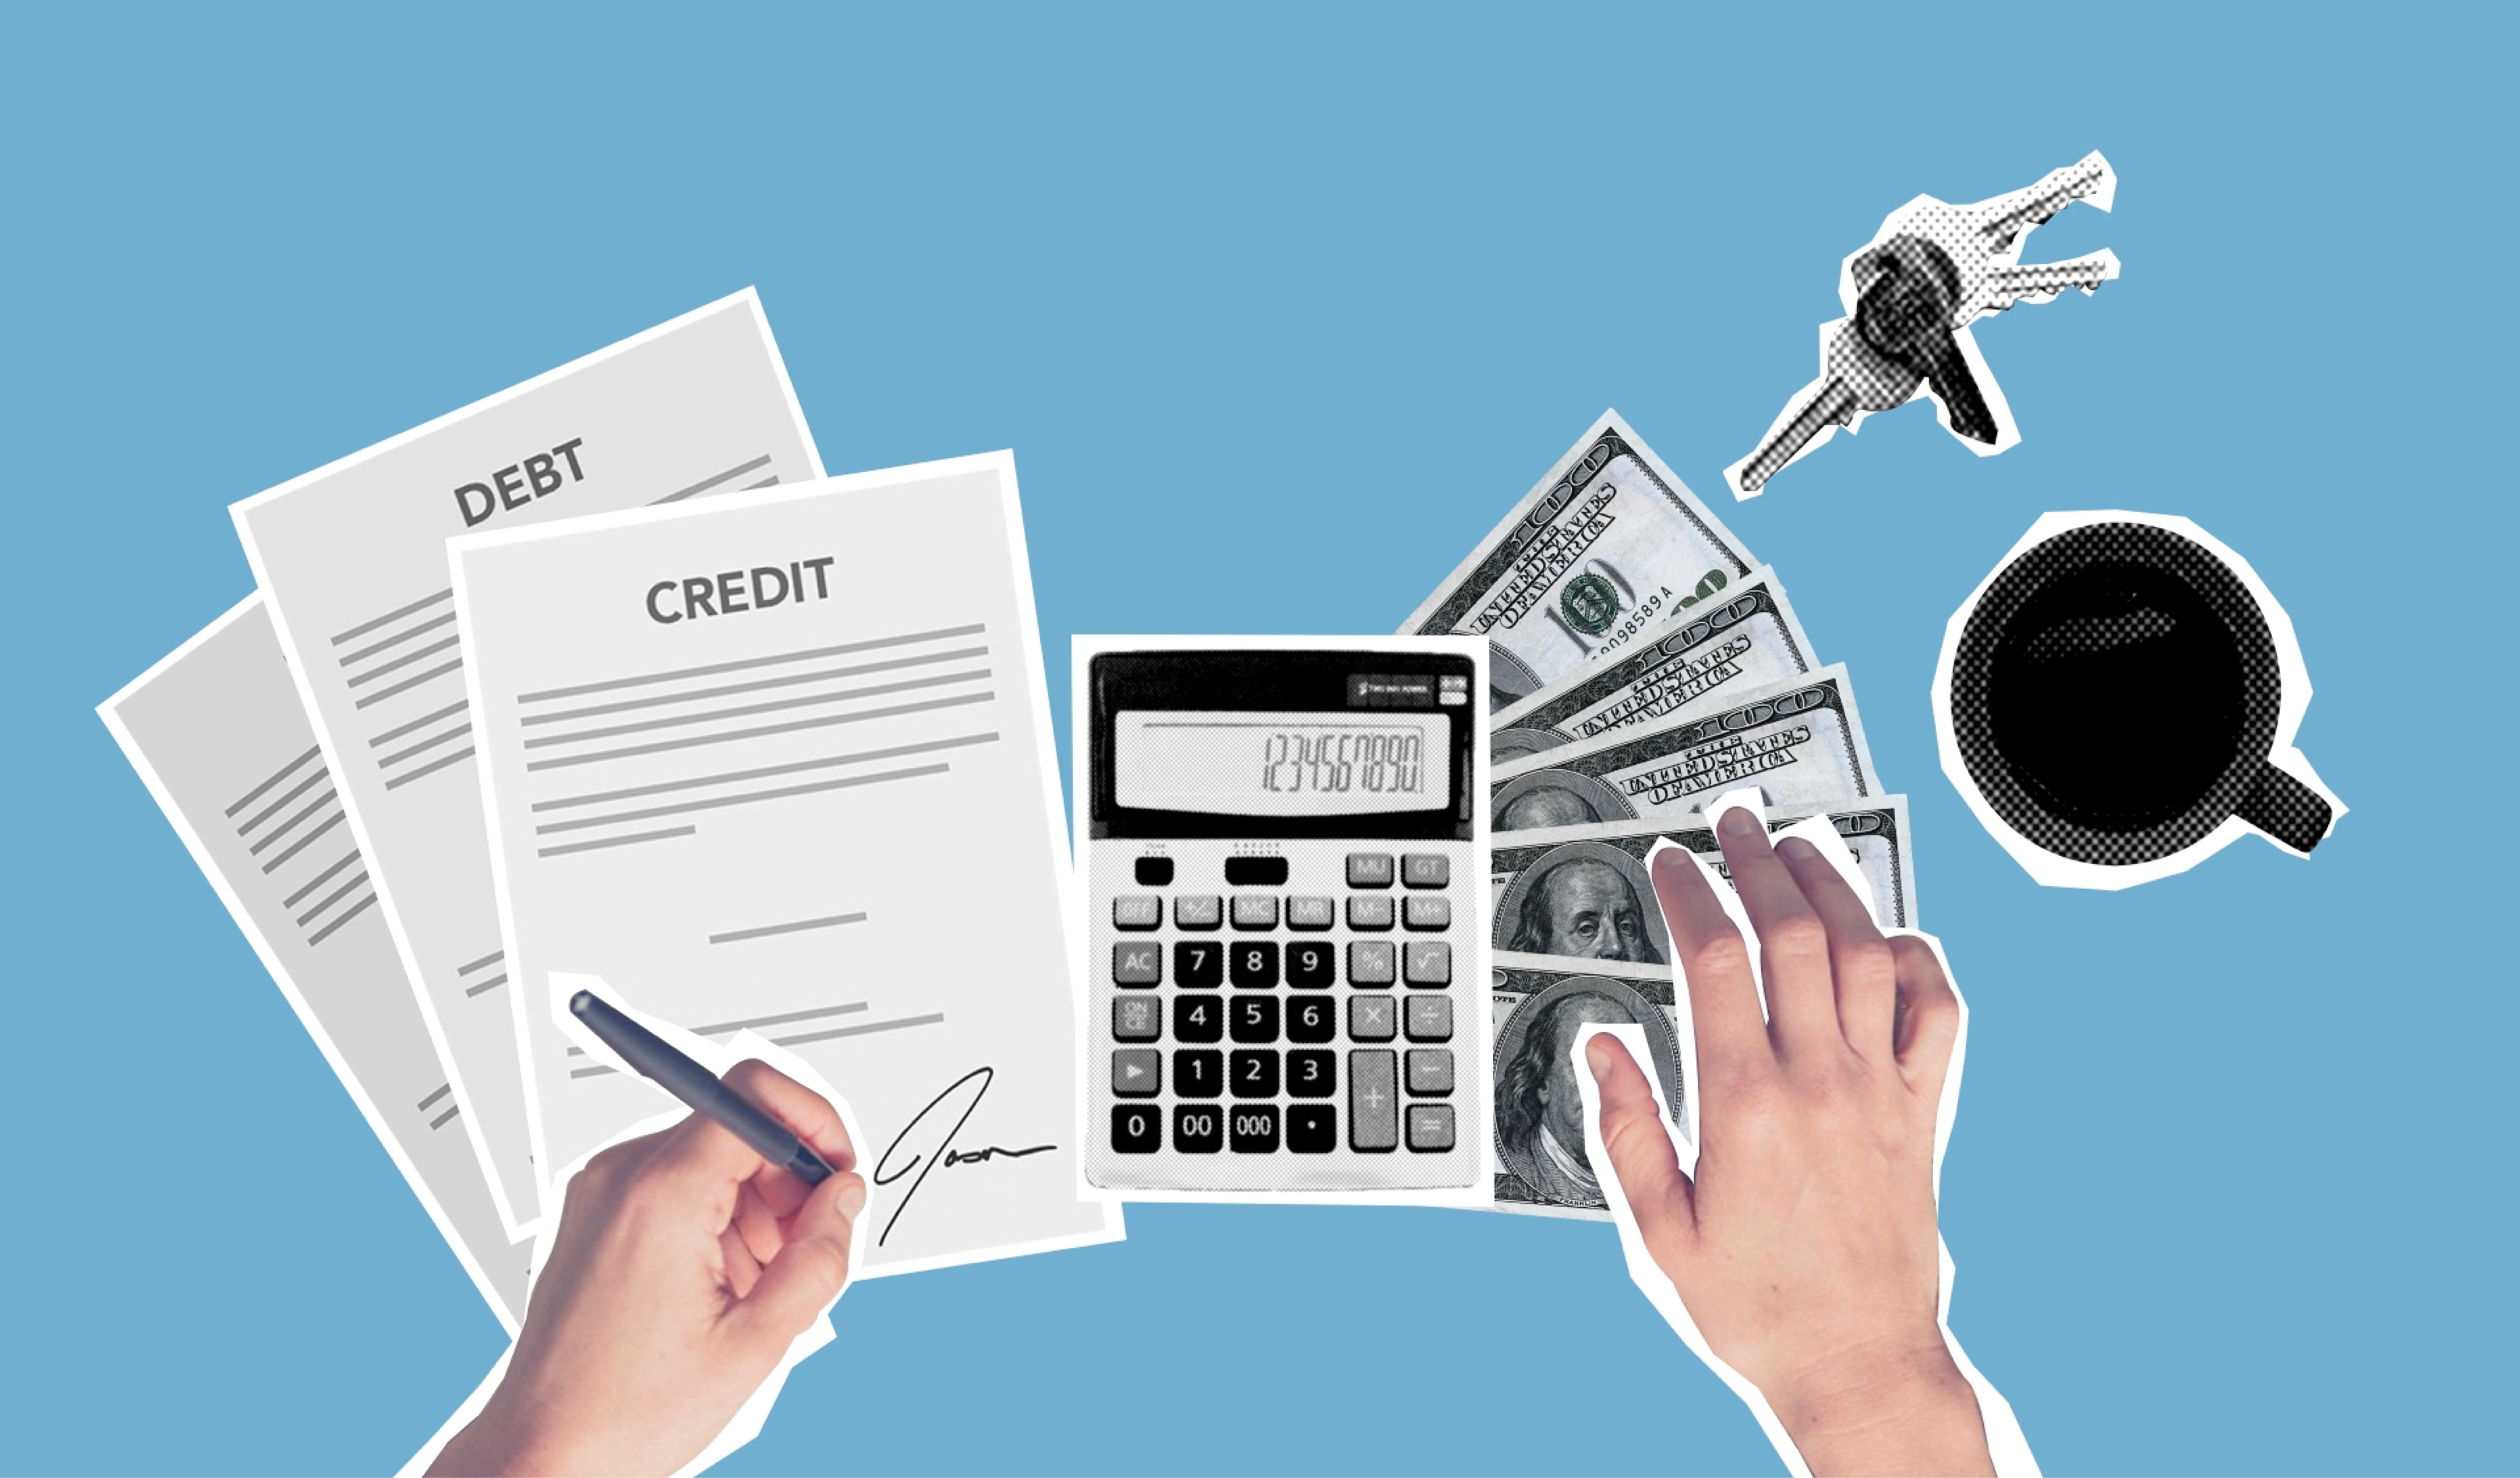 Digital illustration of debt, credit, calculator, cash, mug, keys and purchase loan of an apartment/ 